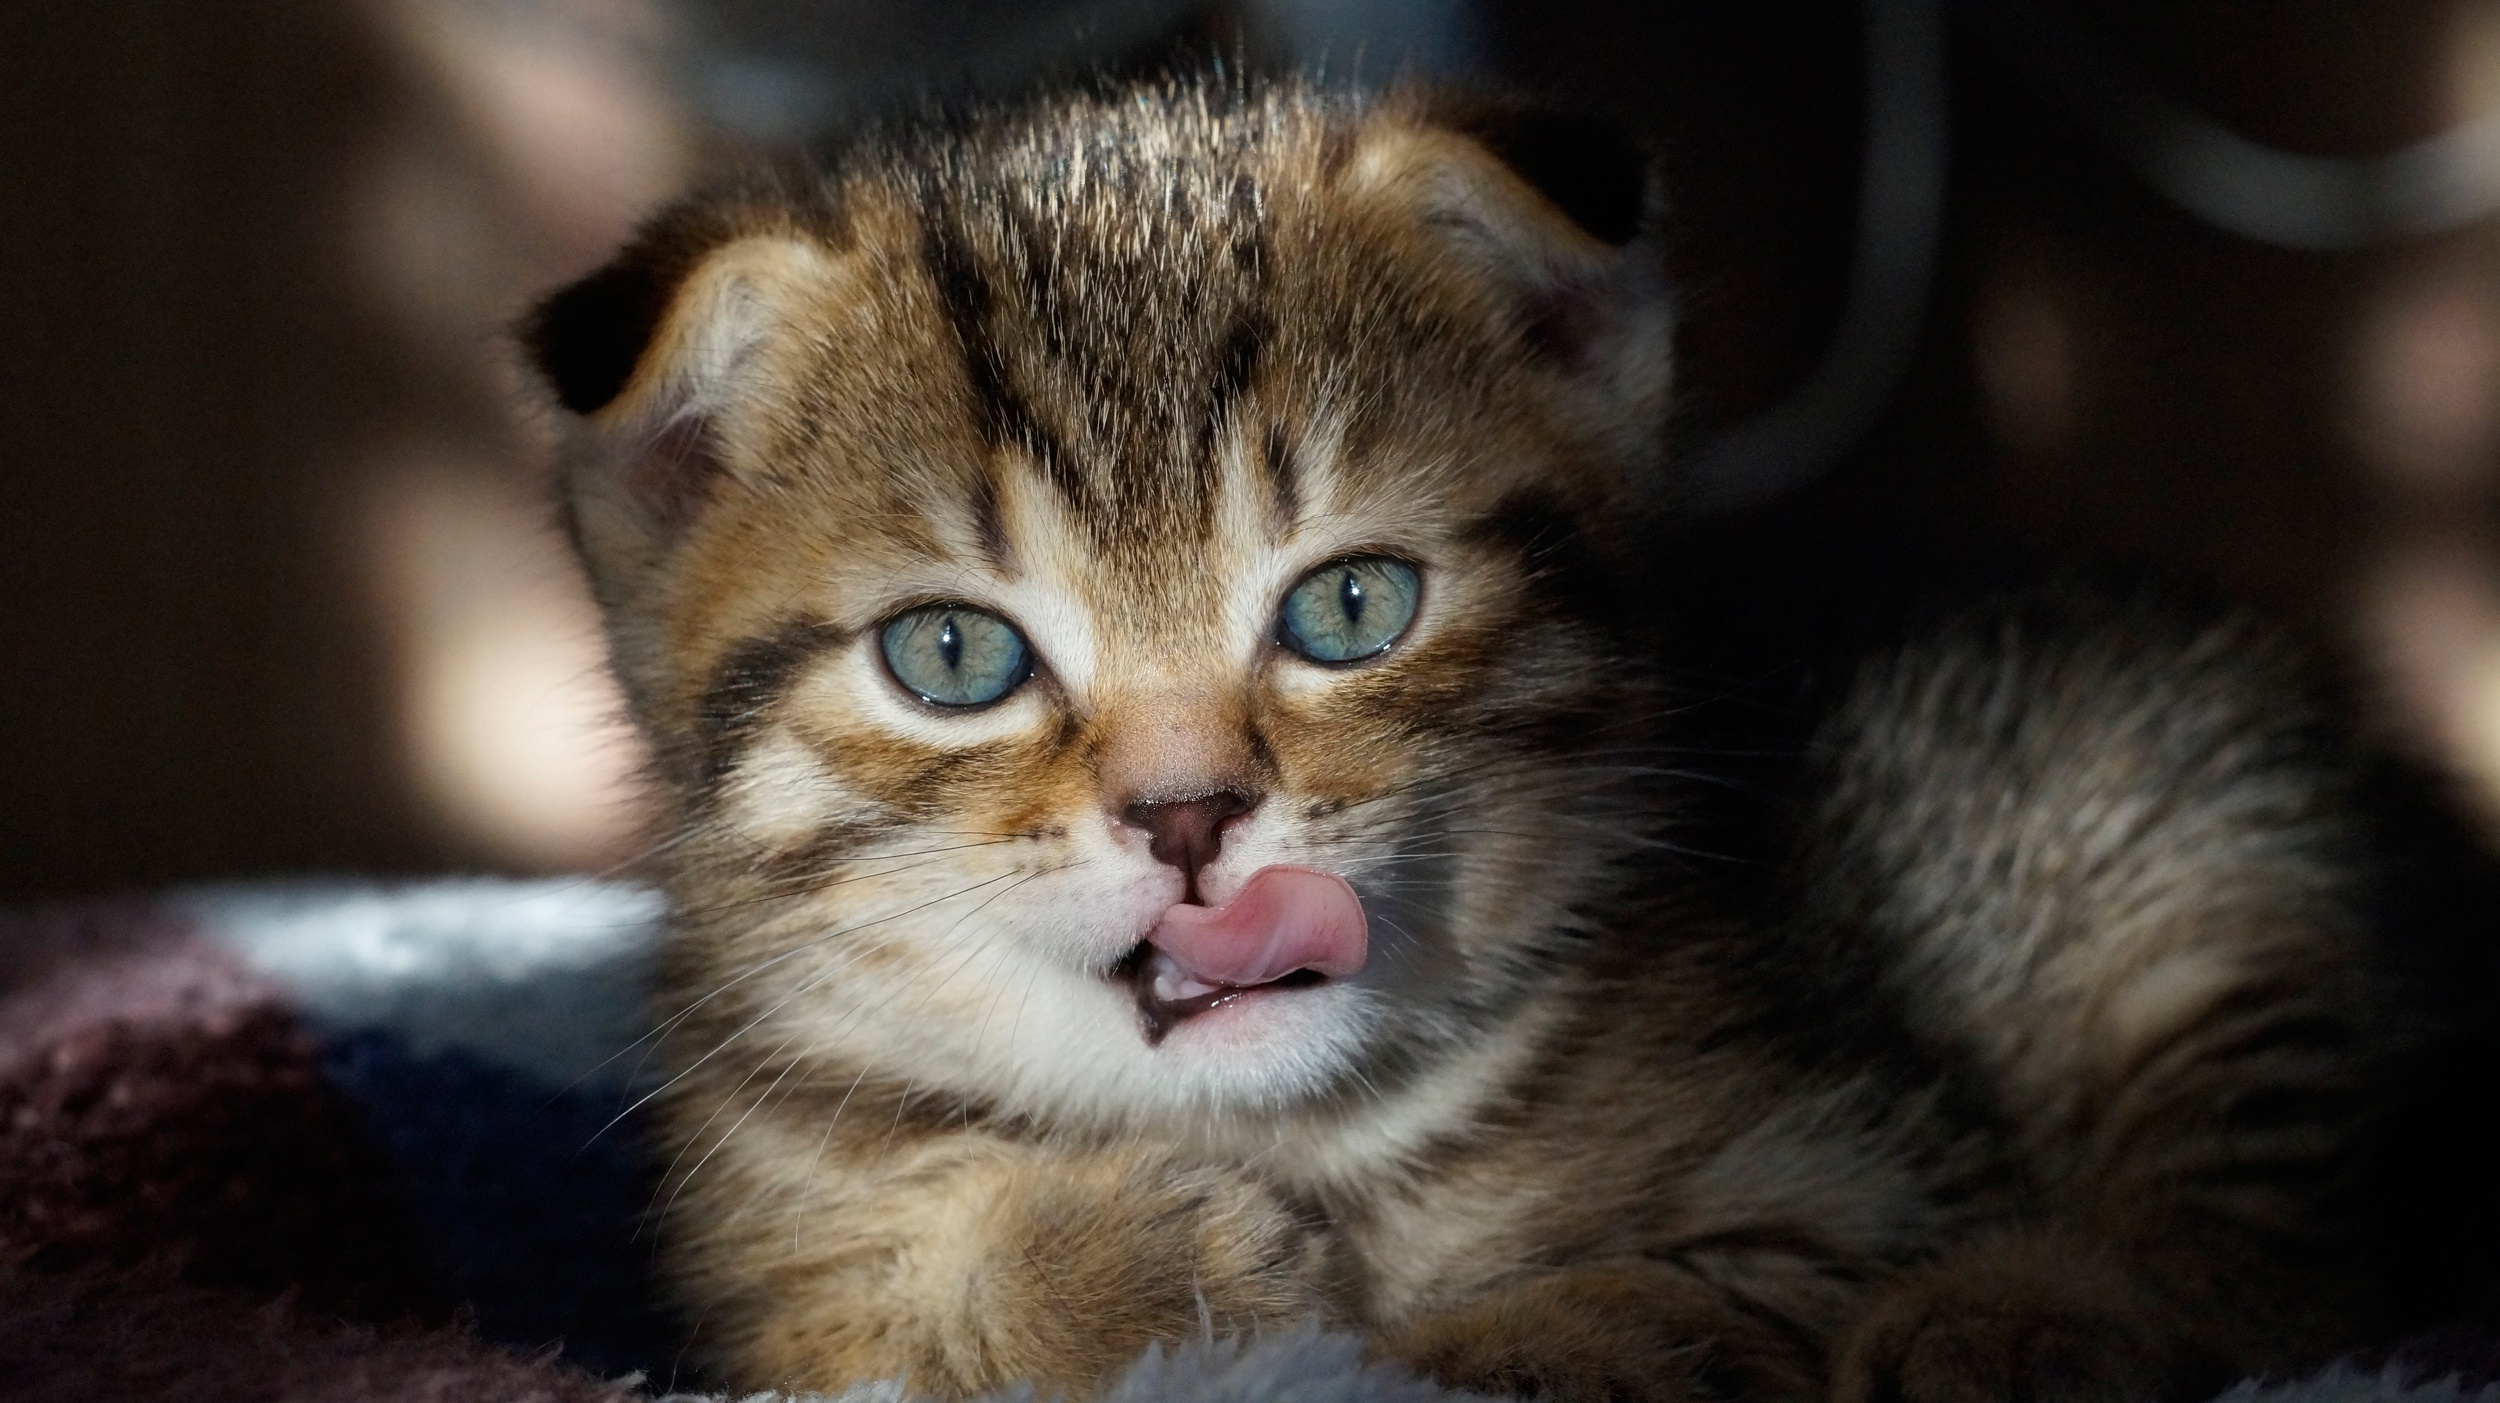 General 2500x1403 animals cats mammals tongues tongue out feline kittens closeup